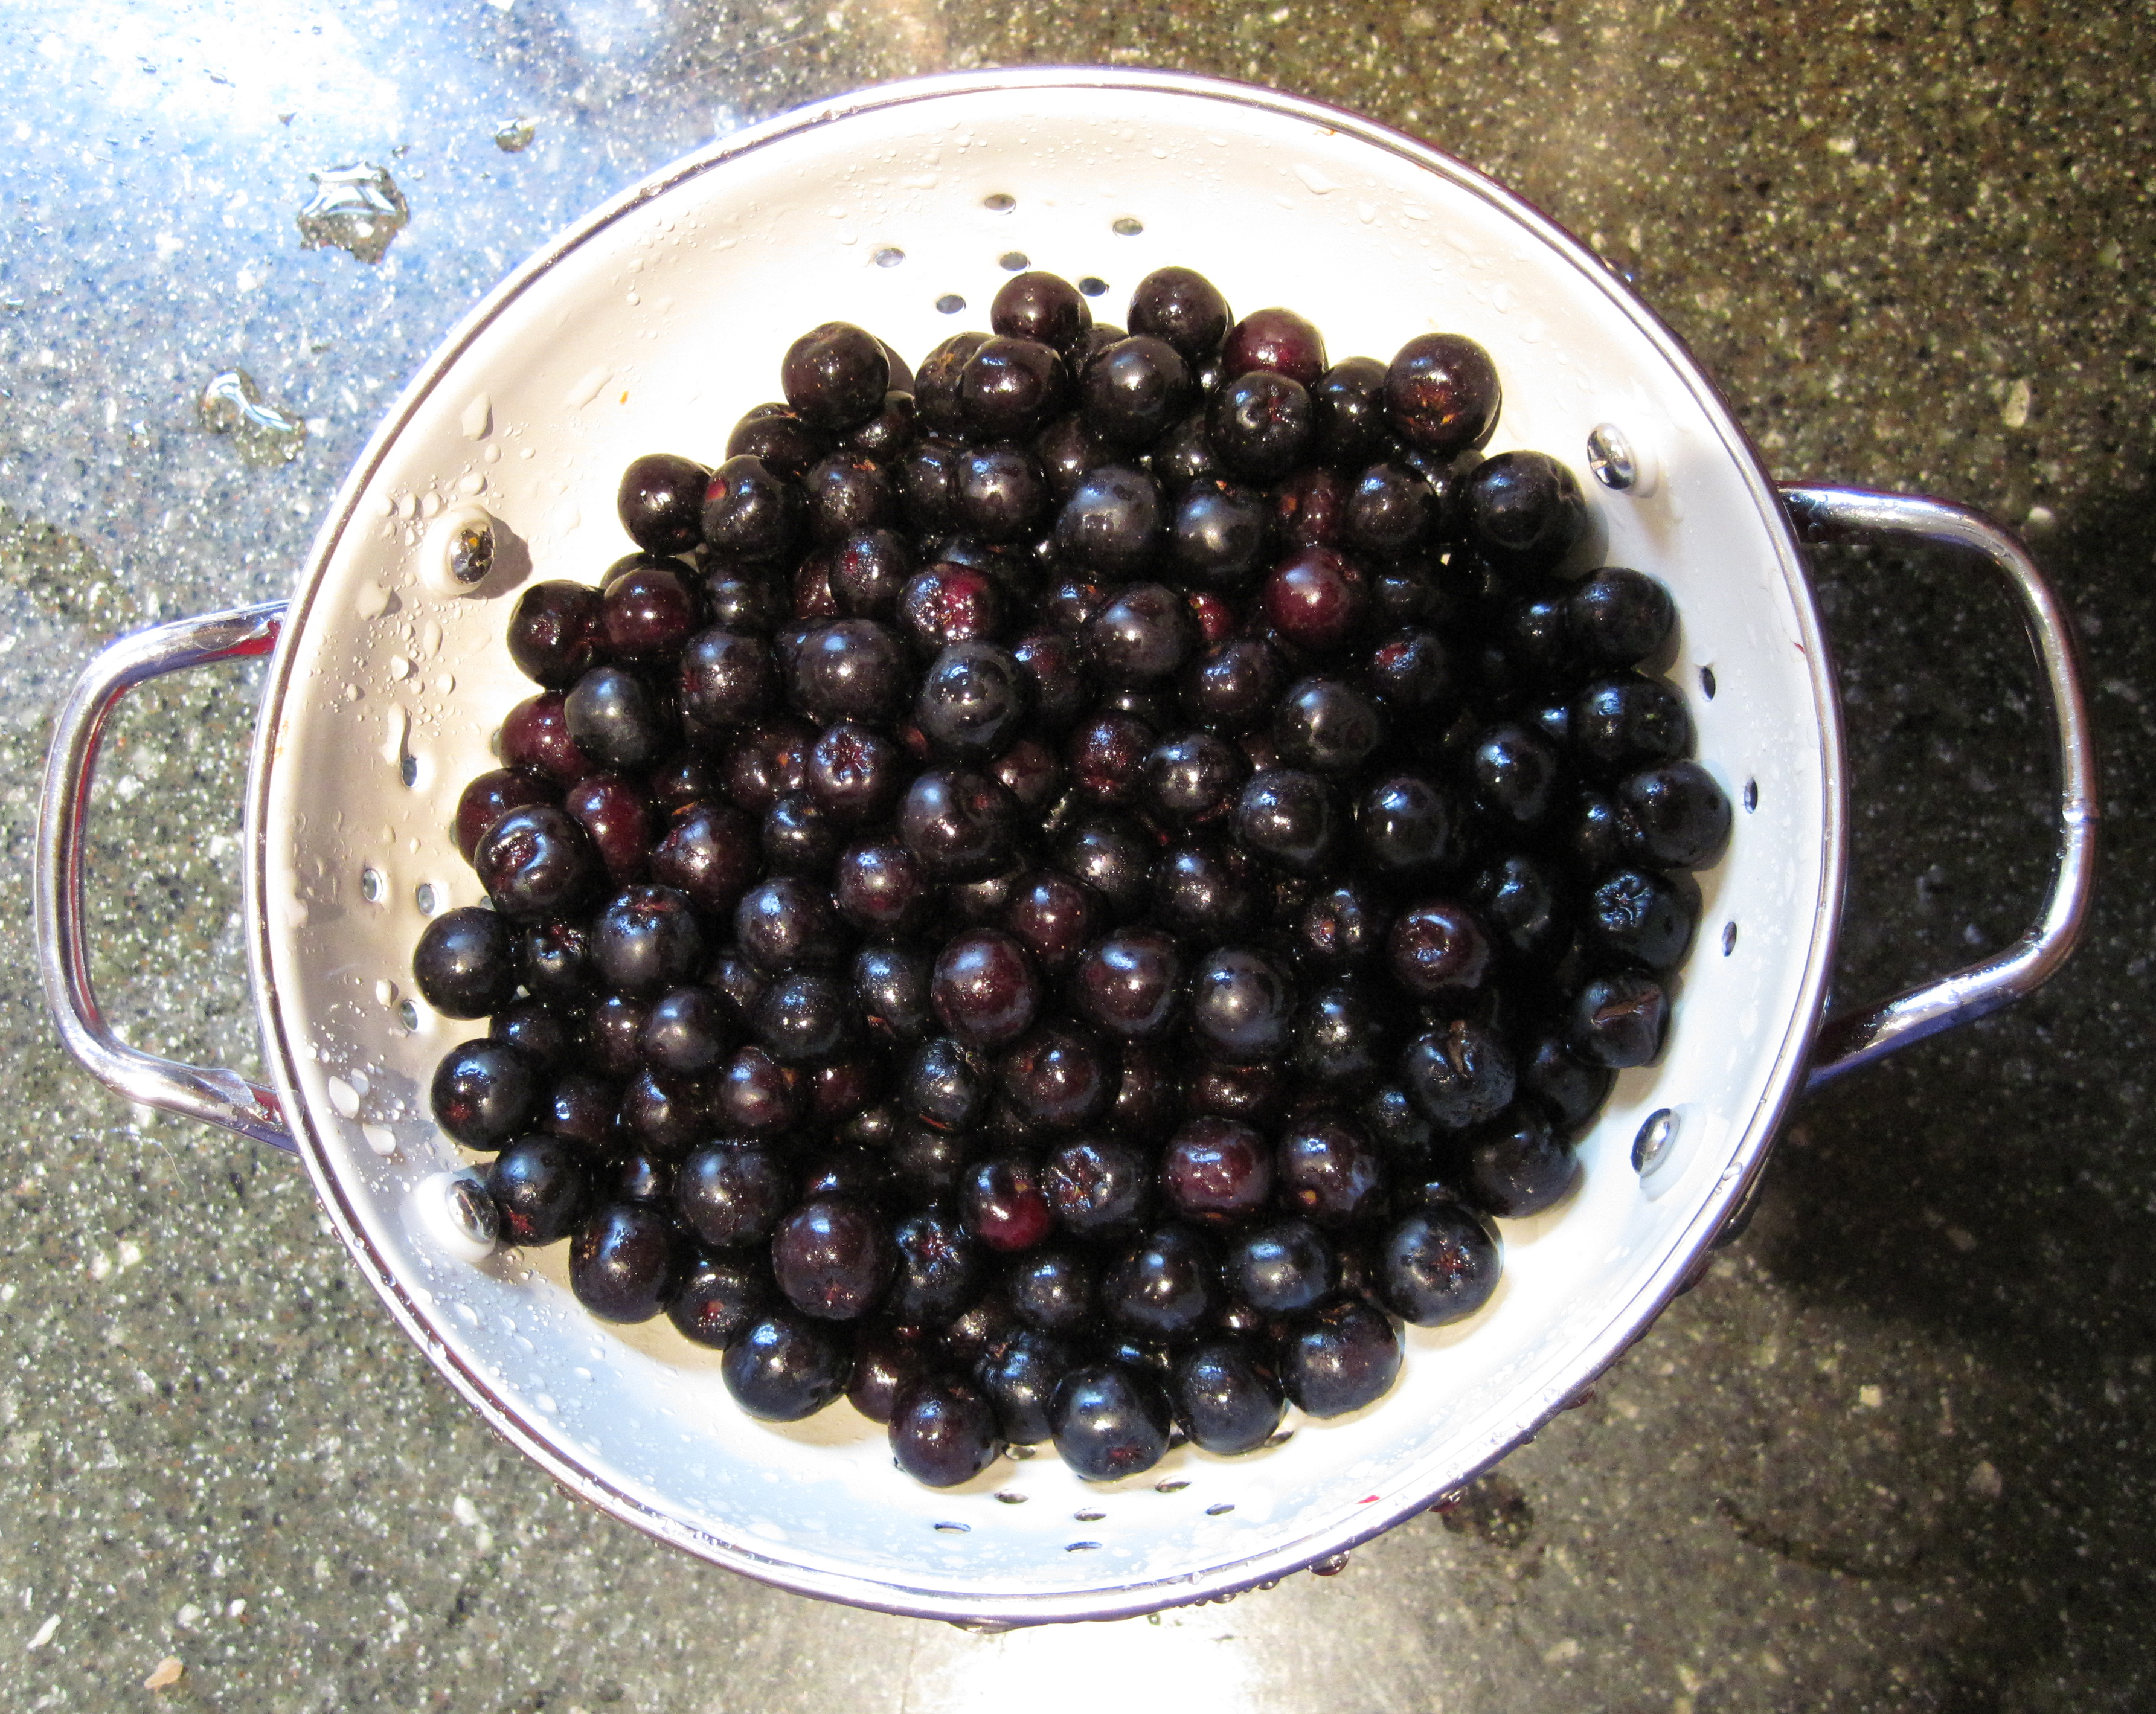 Black-red berries in a colander